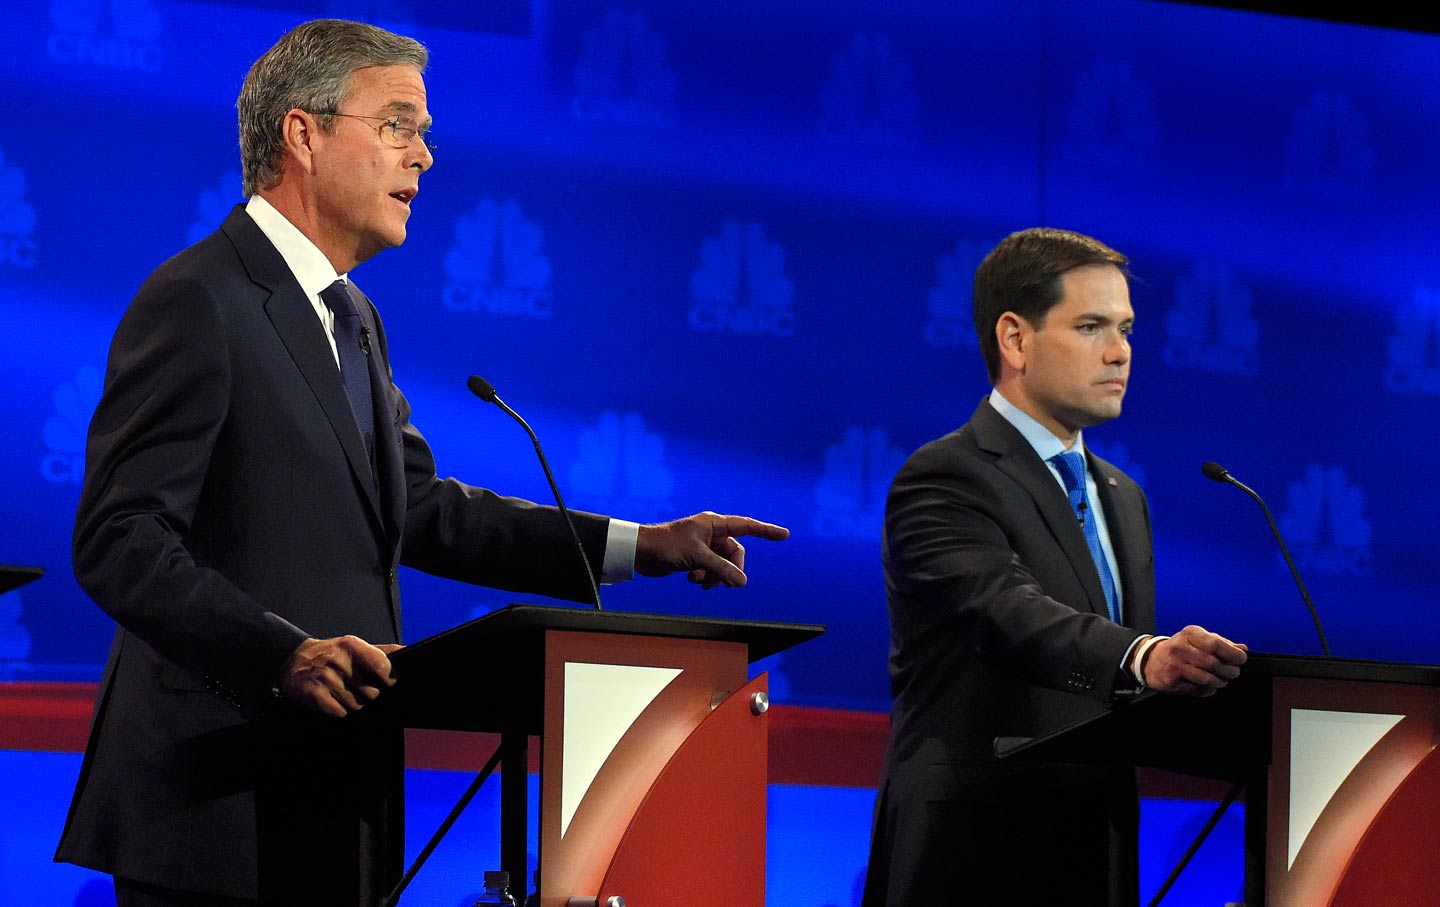 Jeb Bush speaks as Marco Rubio looks on during the October 28 Republican presidential debate.